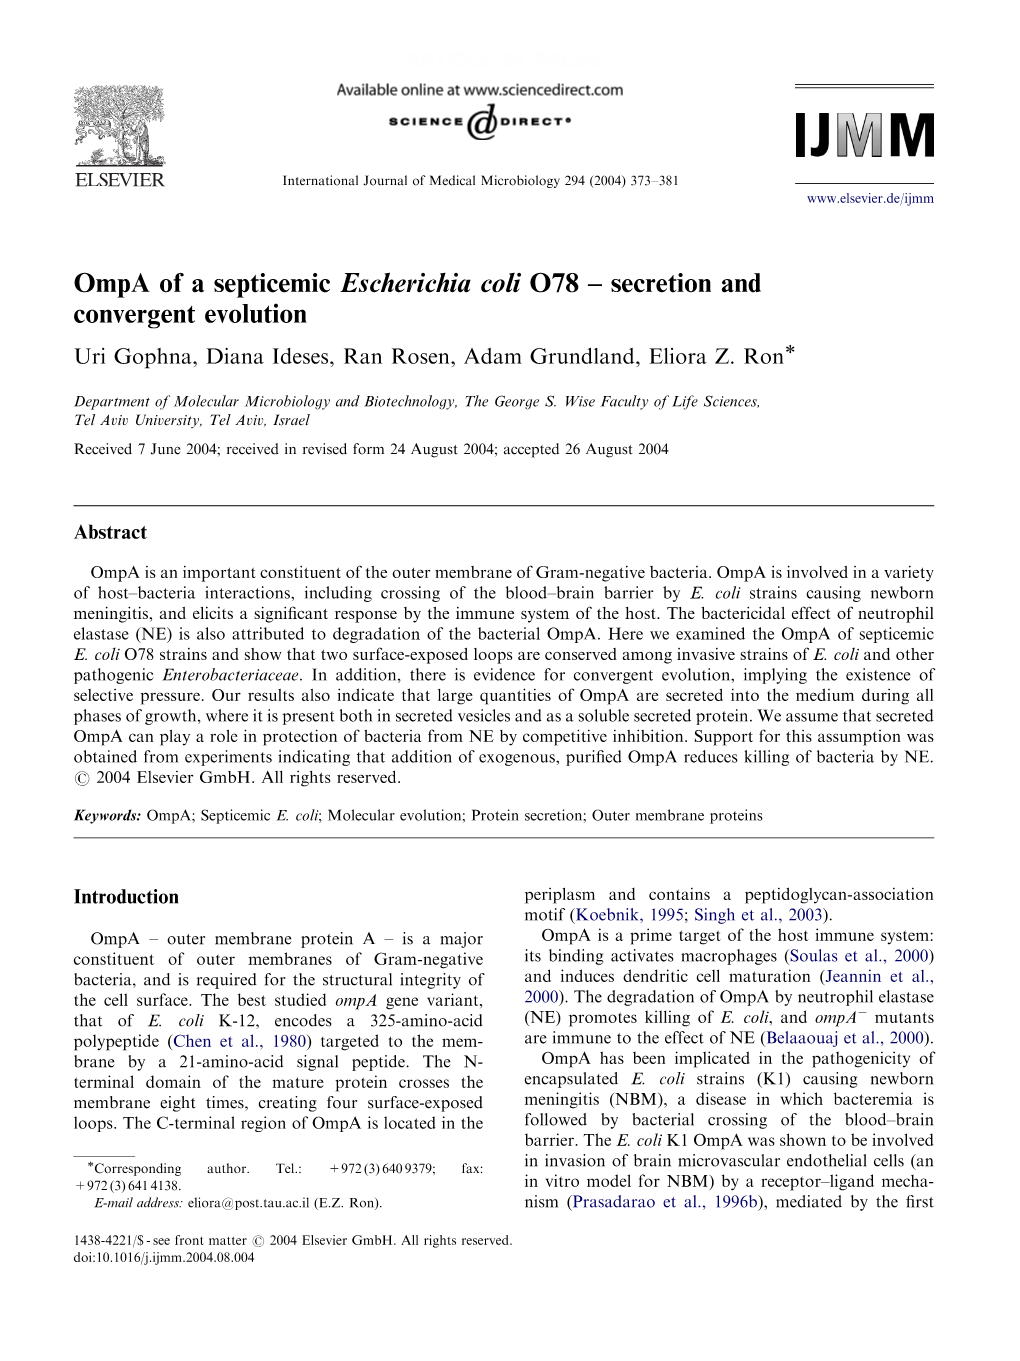 Ompa of a Septicemic Escherichia Coli O78 – Secretion and Convergent Evolution Uri Gophna, Diana Ideses, Ran Rosen, Adam Grundland, Eliora Z